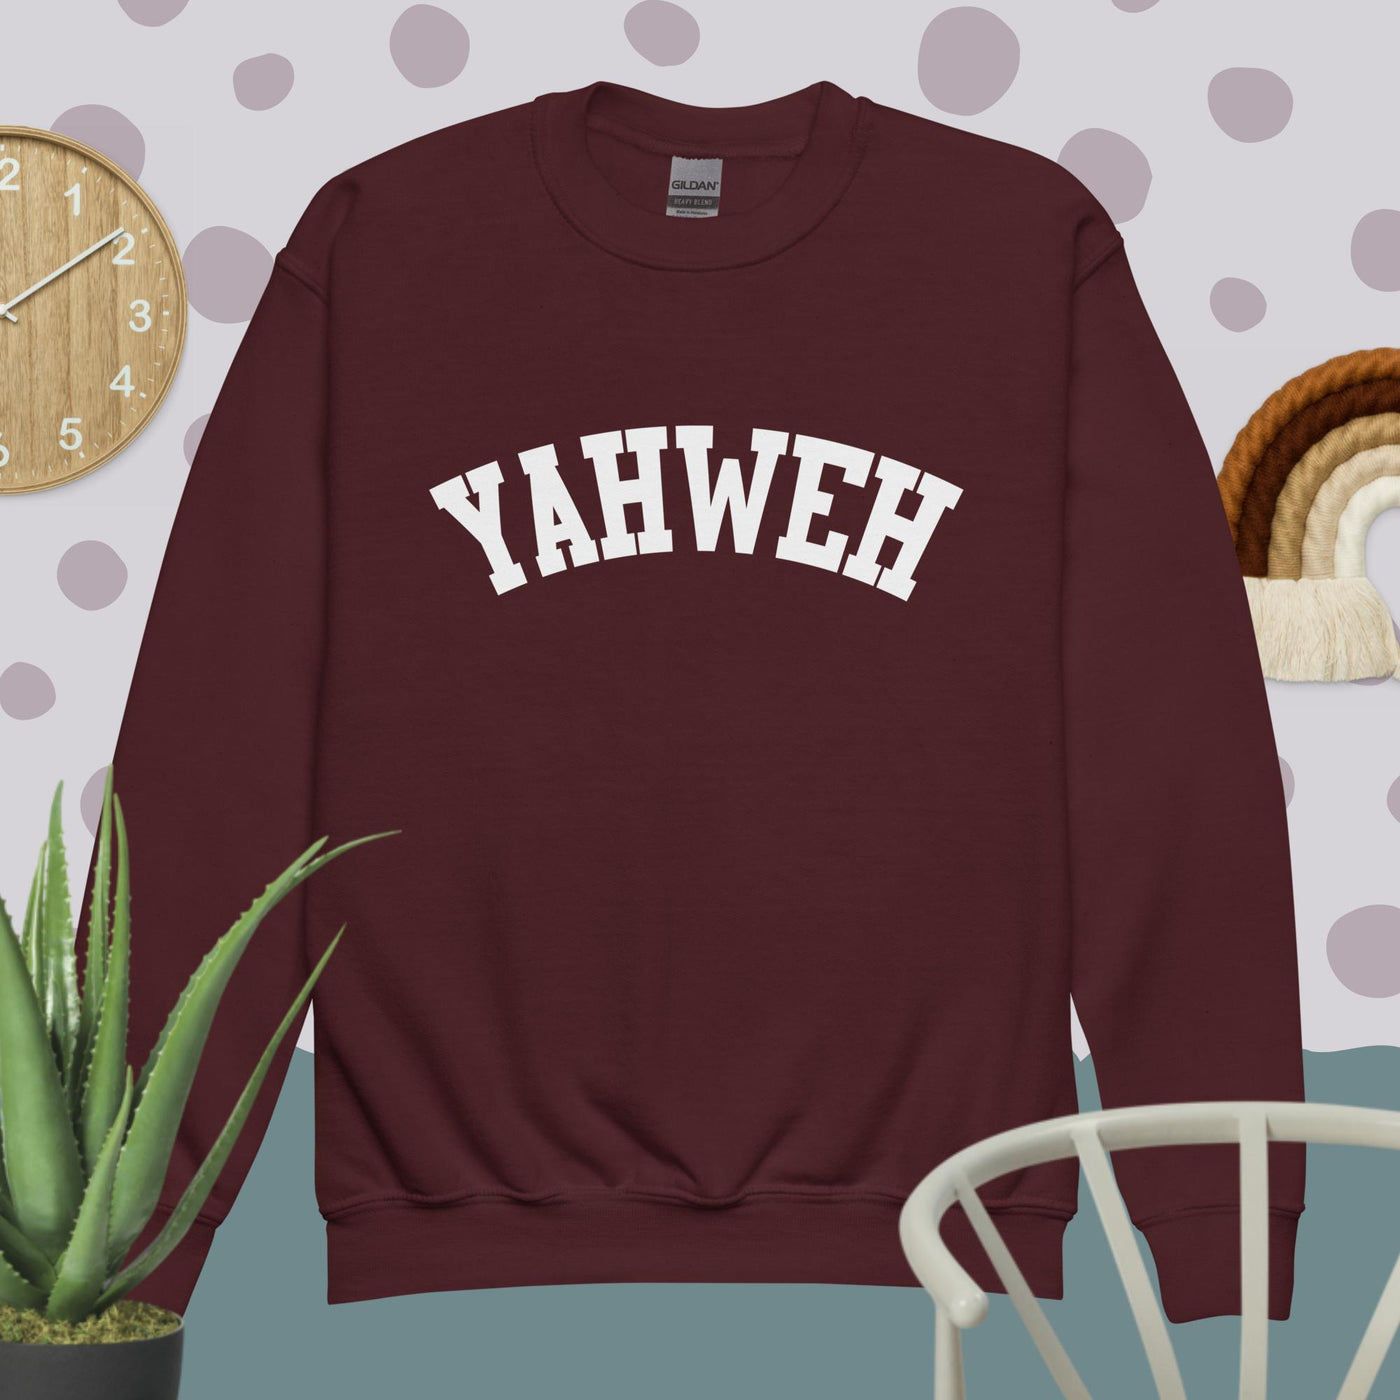 F&H Yahweh Unisex Youth crewneck sweatshirt